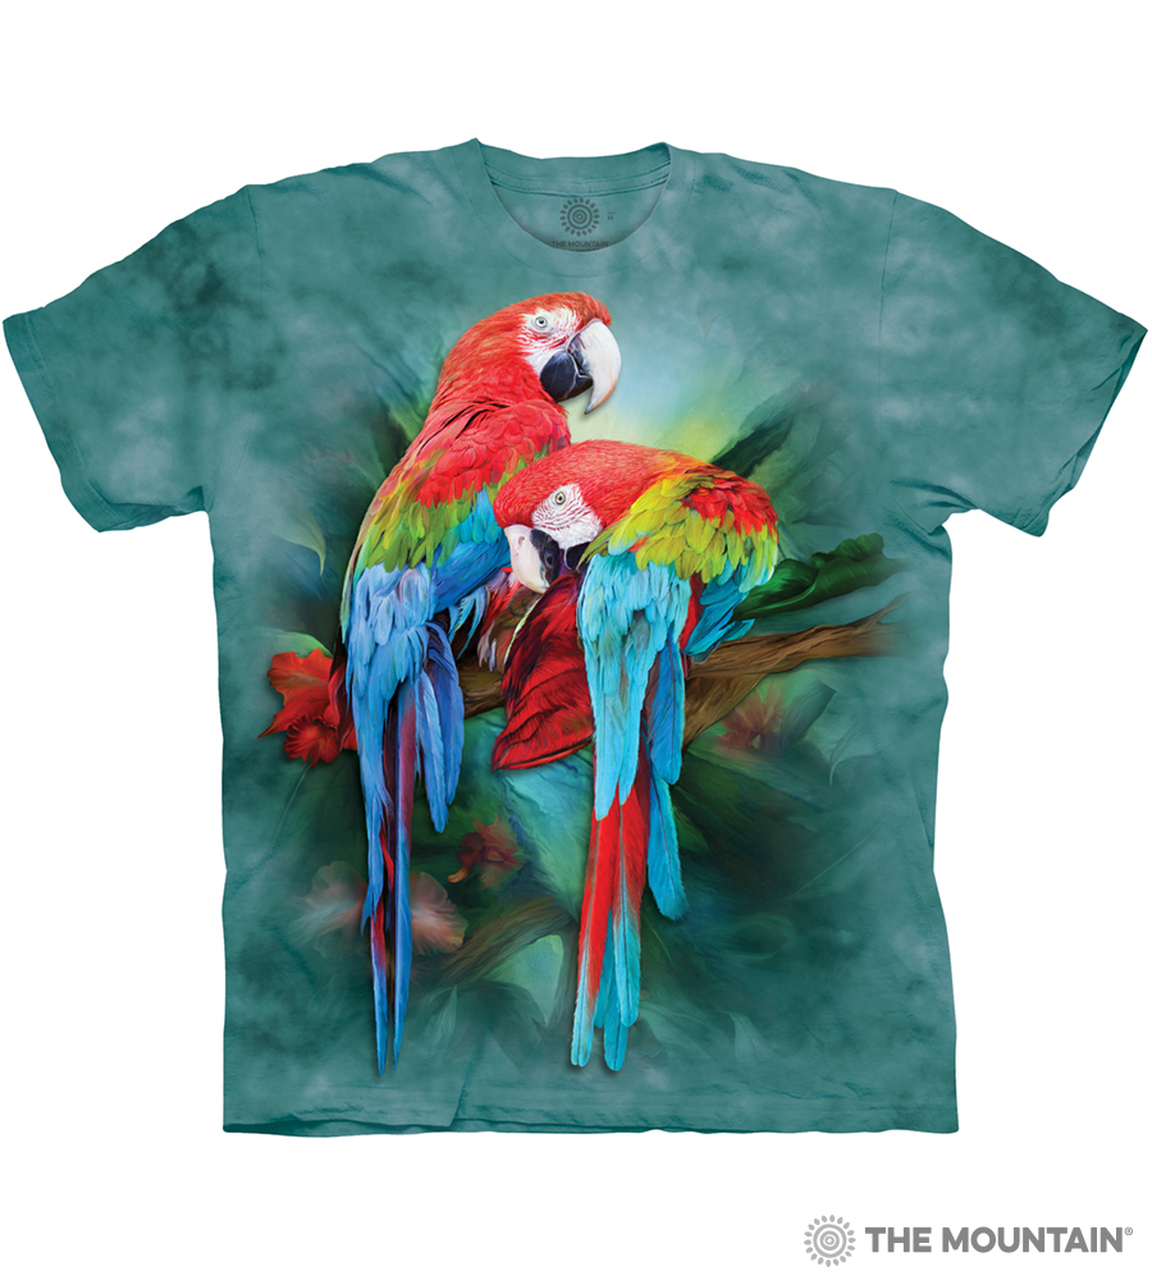 Somdiff - Macaw Mates